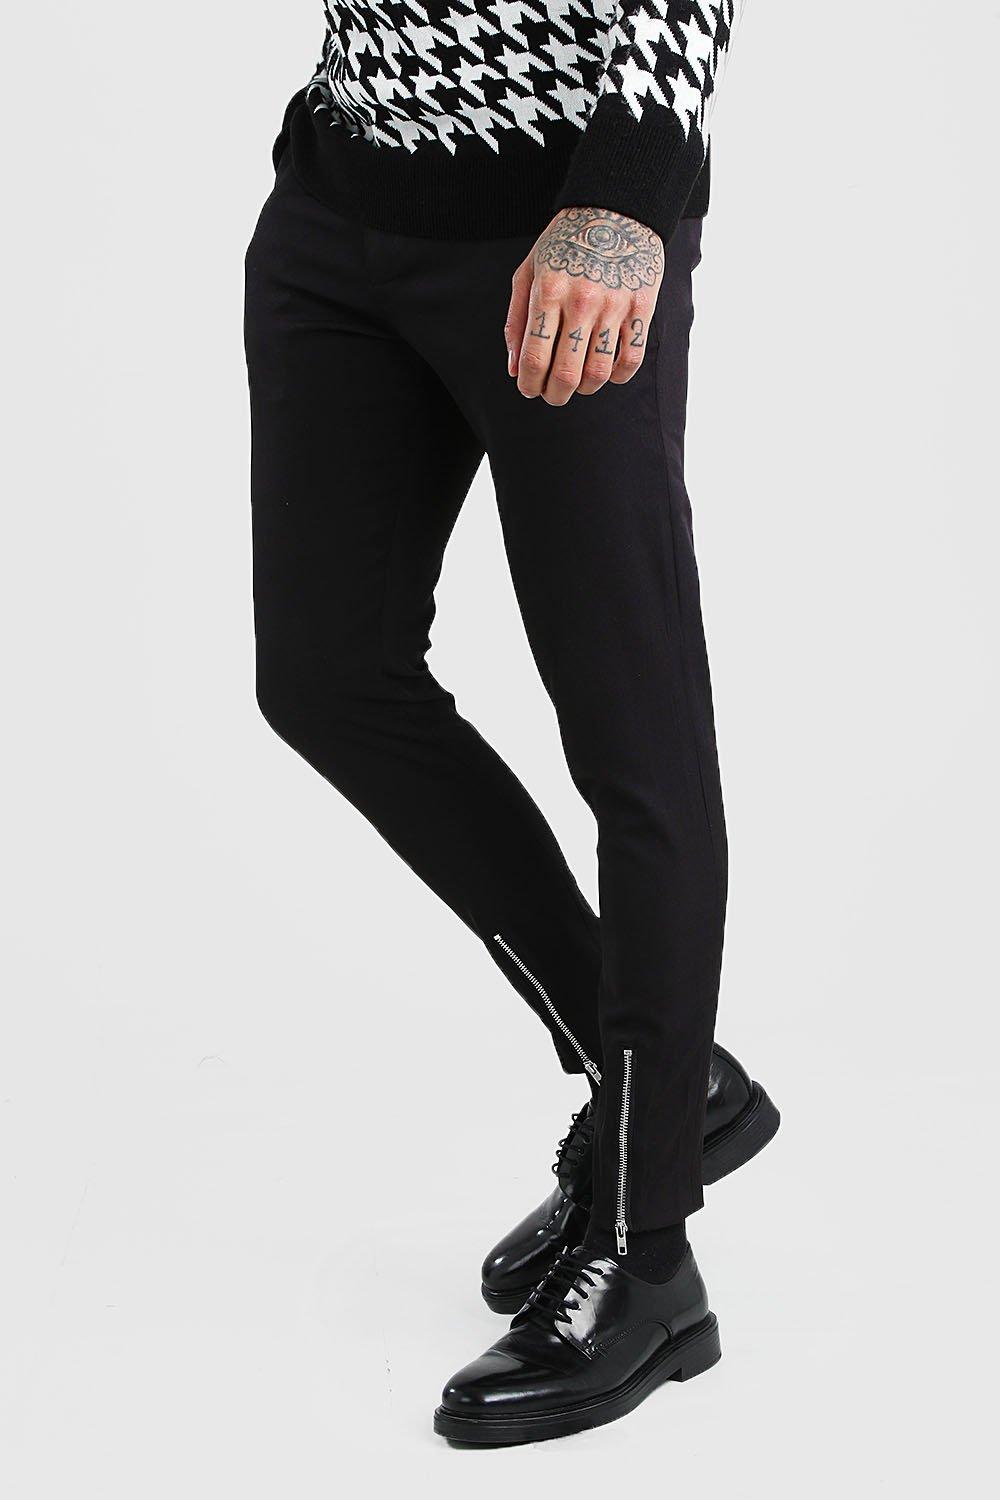 super skinny black trousers